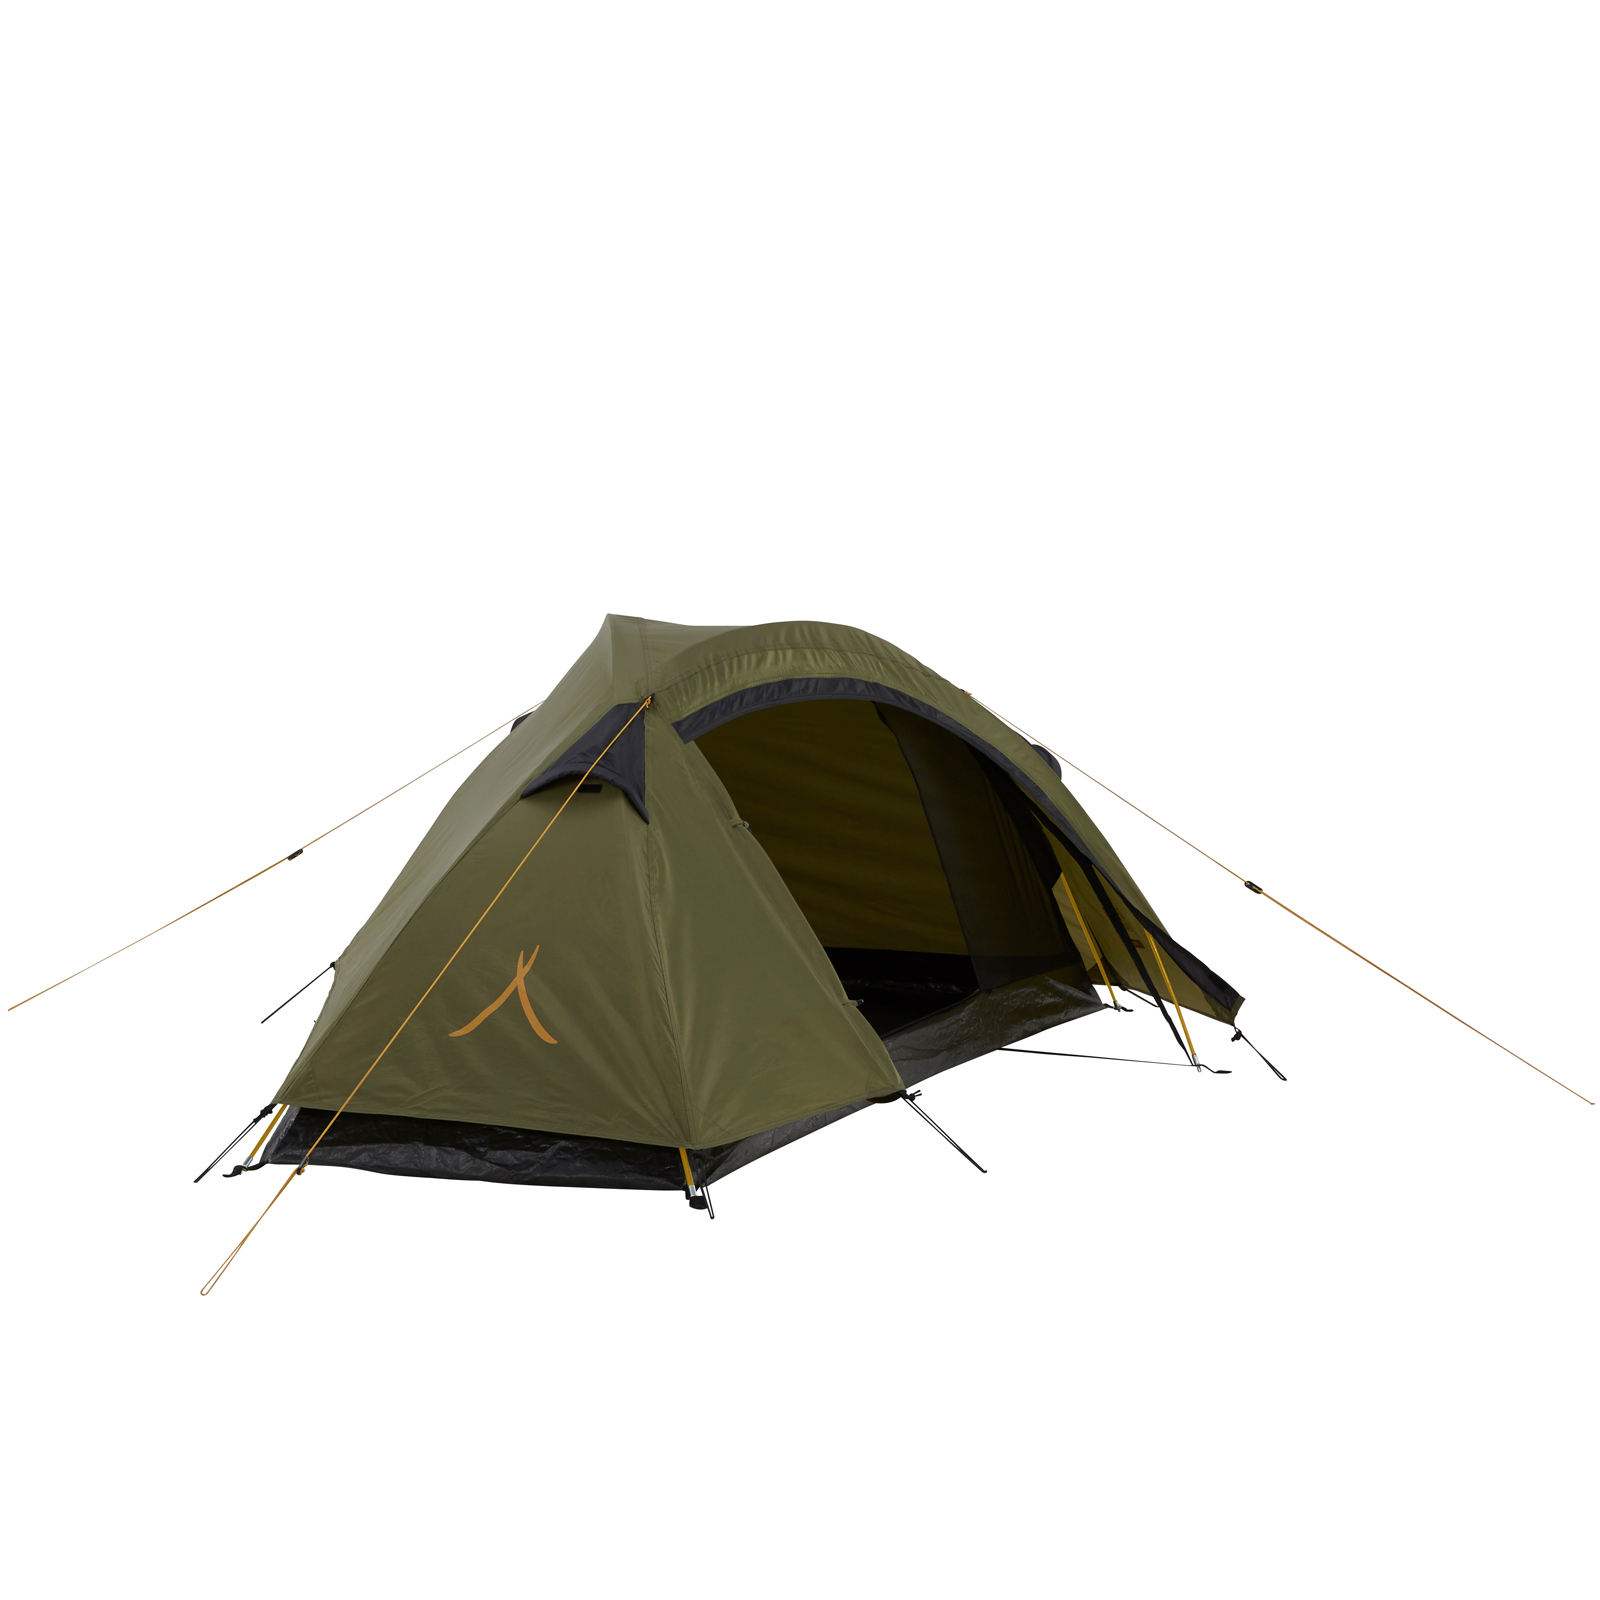 GRAND CANYON Apex 1 Personen Geodät Trekking Zelt Einmann Camping 2,3 kg Leicht